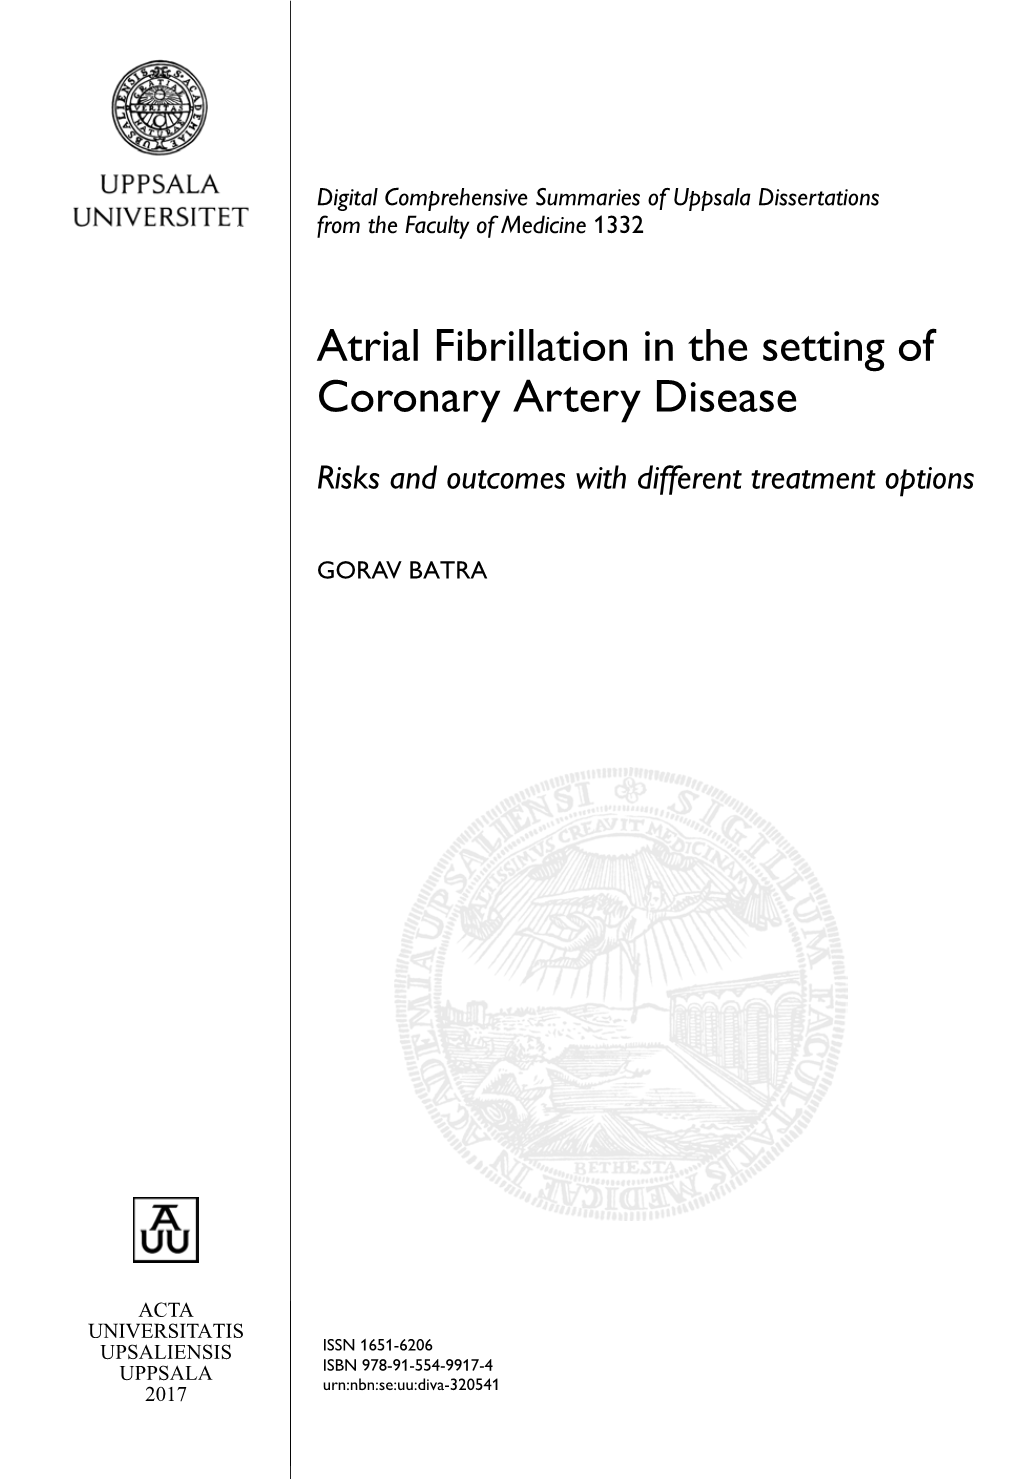 Atrial Fibrillation in the Setting of Coronary Artery Disease